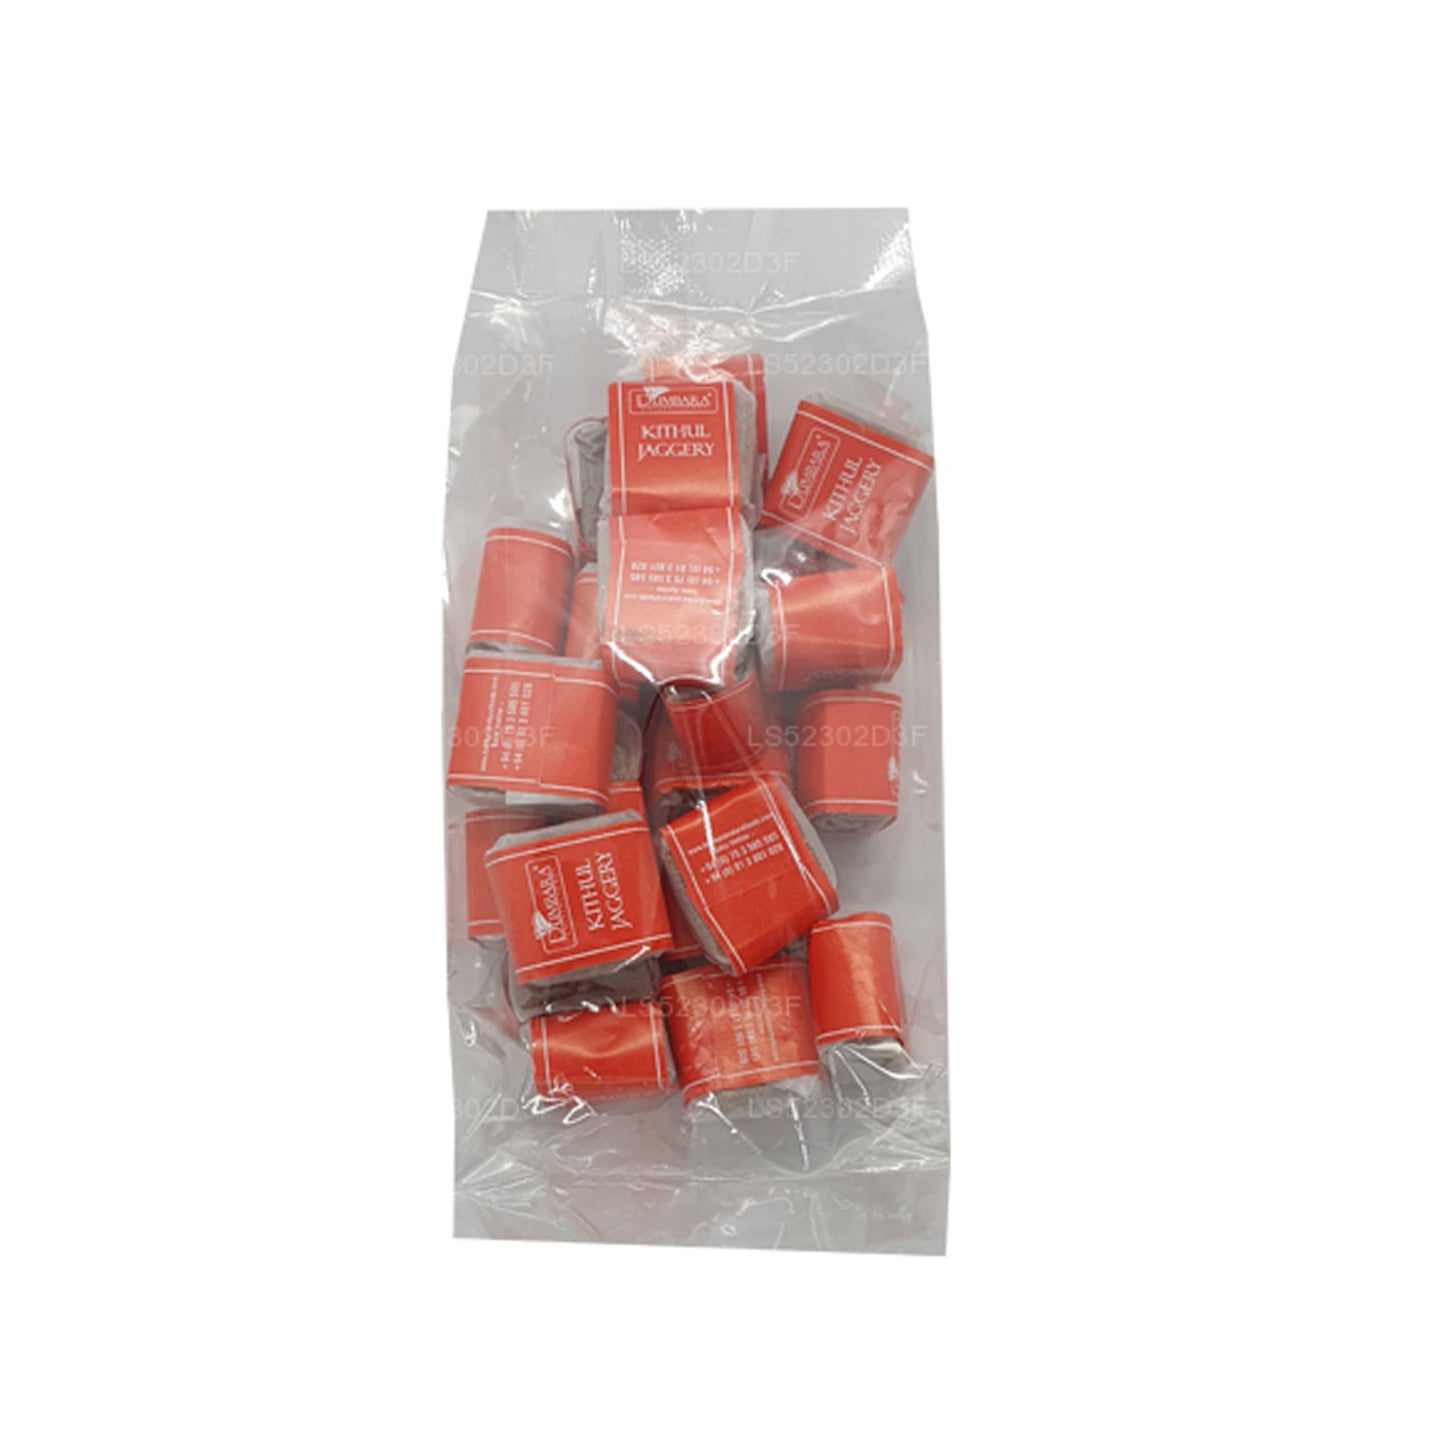 Dumbara Kithul Jaggery 8g x 25 Cubes (200g)